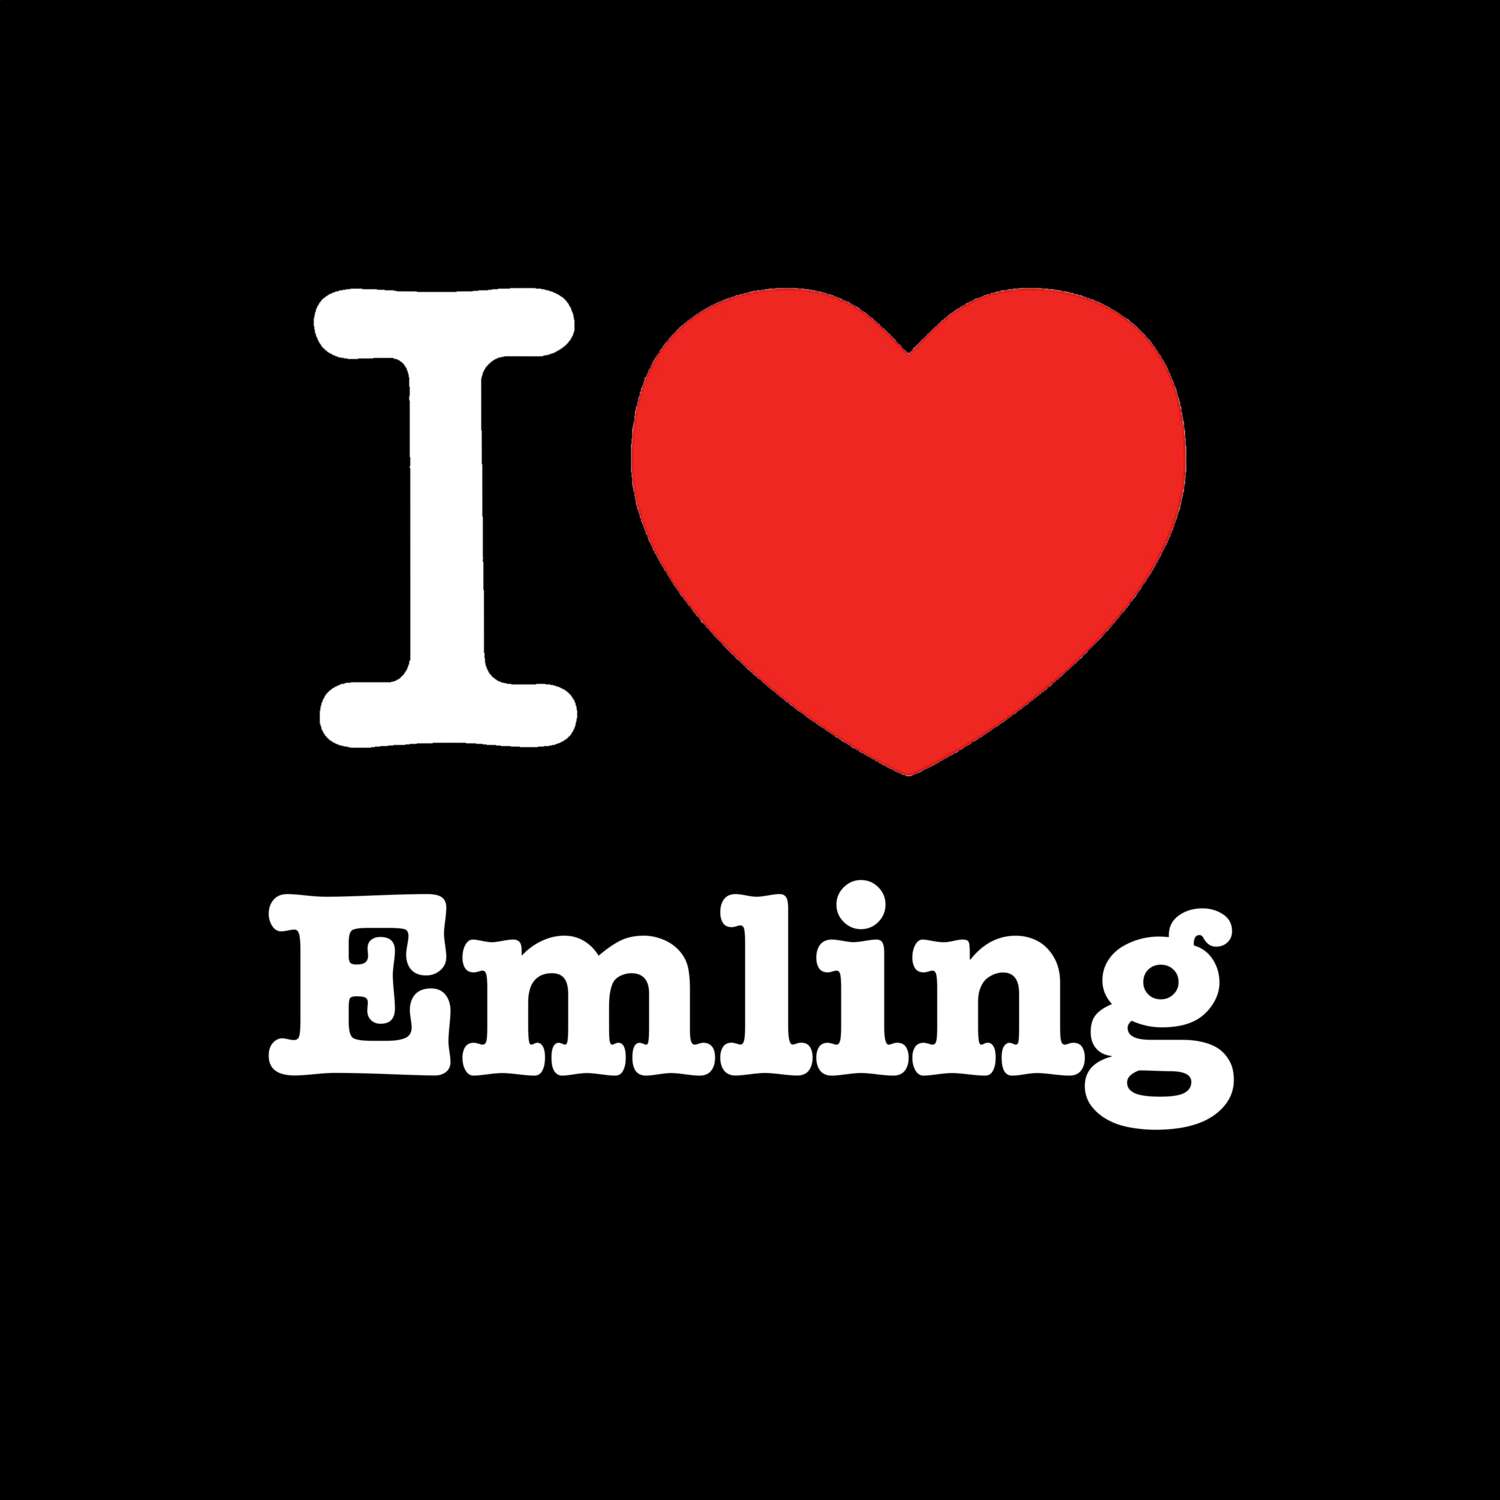 Emling T-Shirt »I love«